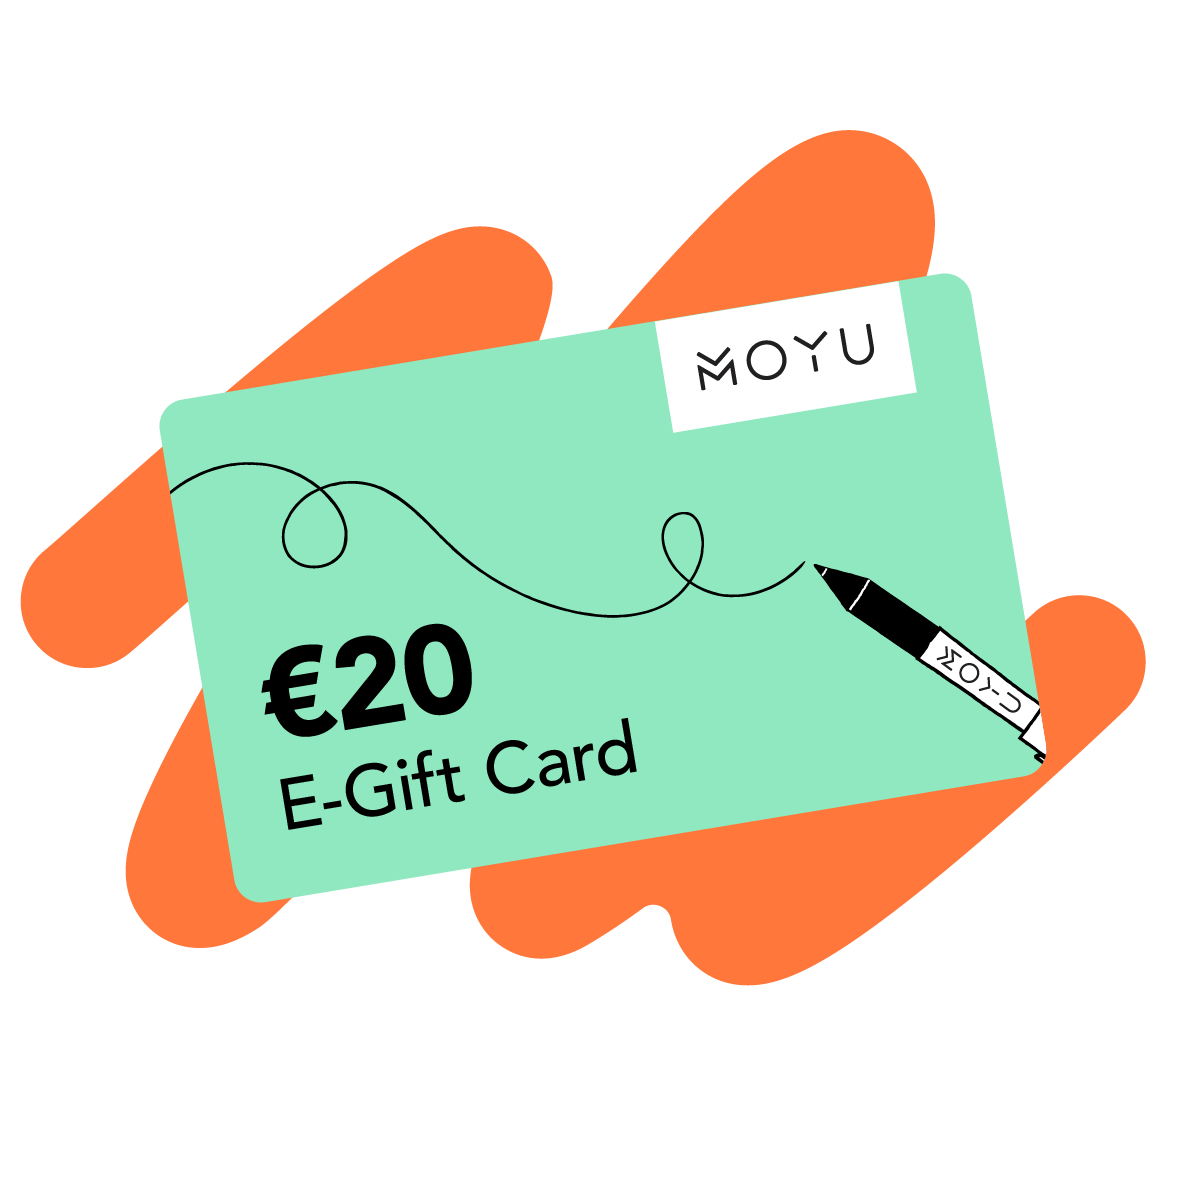 moyu-gift-card-20-euros